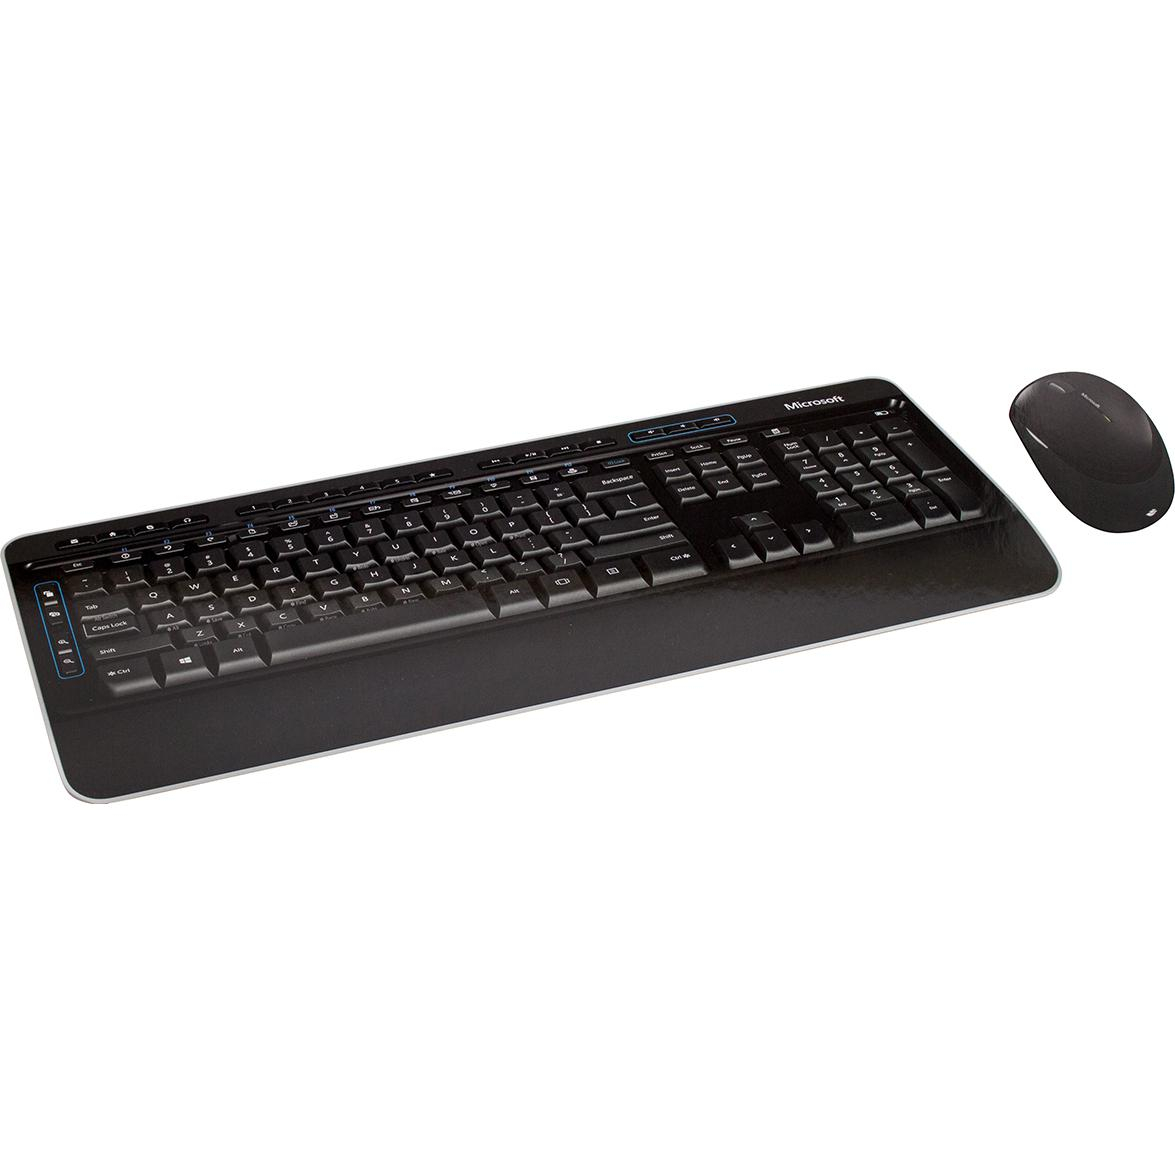 Microsoft 3050 Wireless Desktop Keyboard and Mouse  